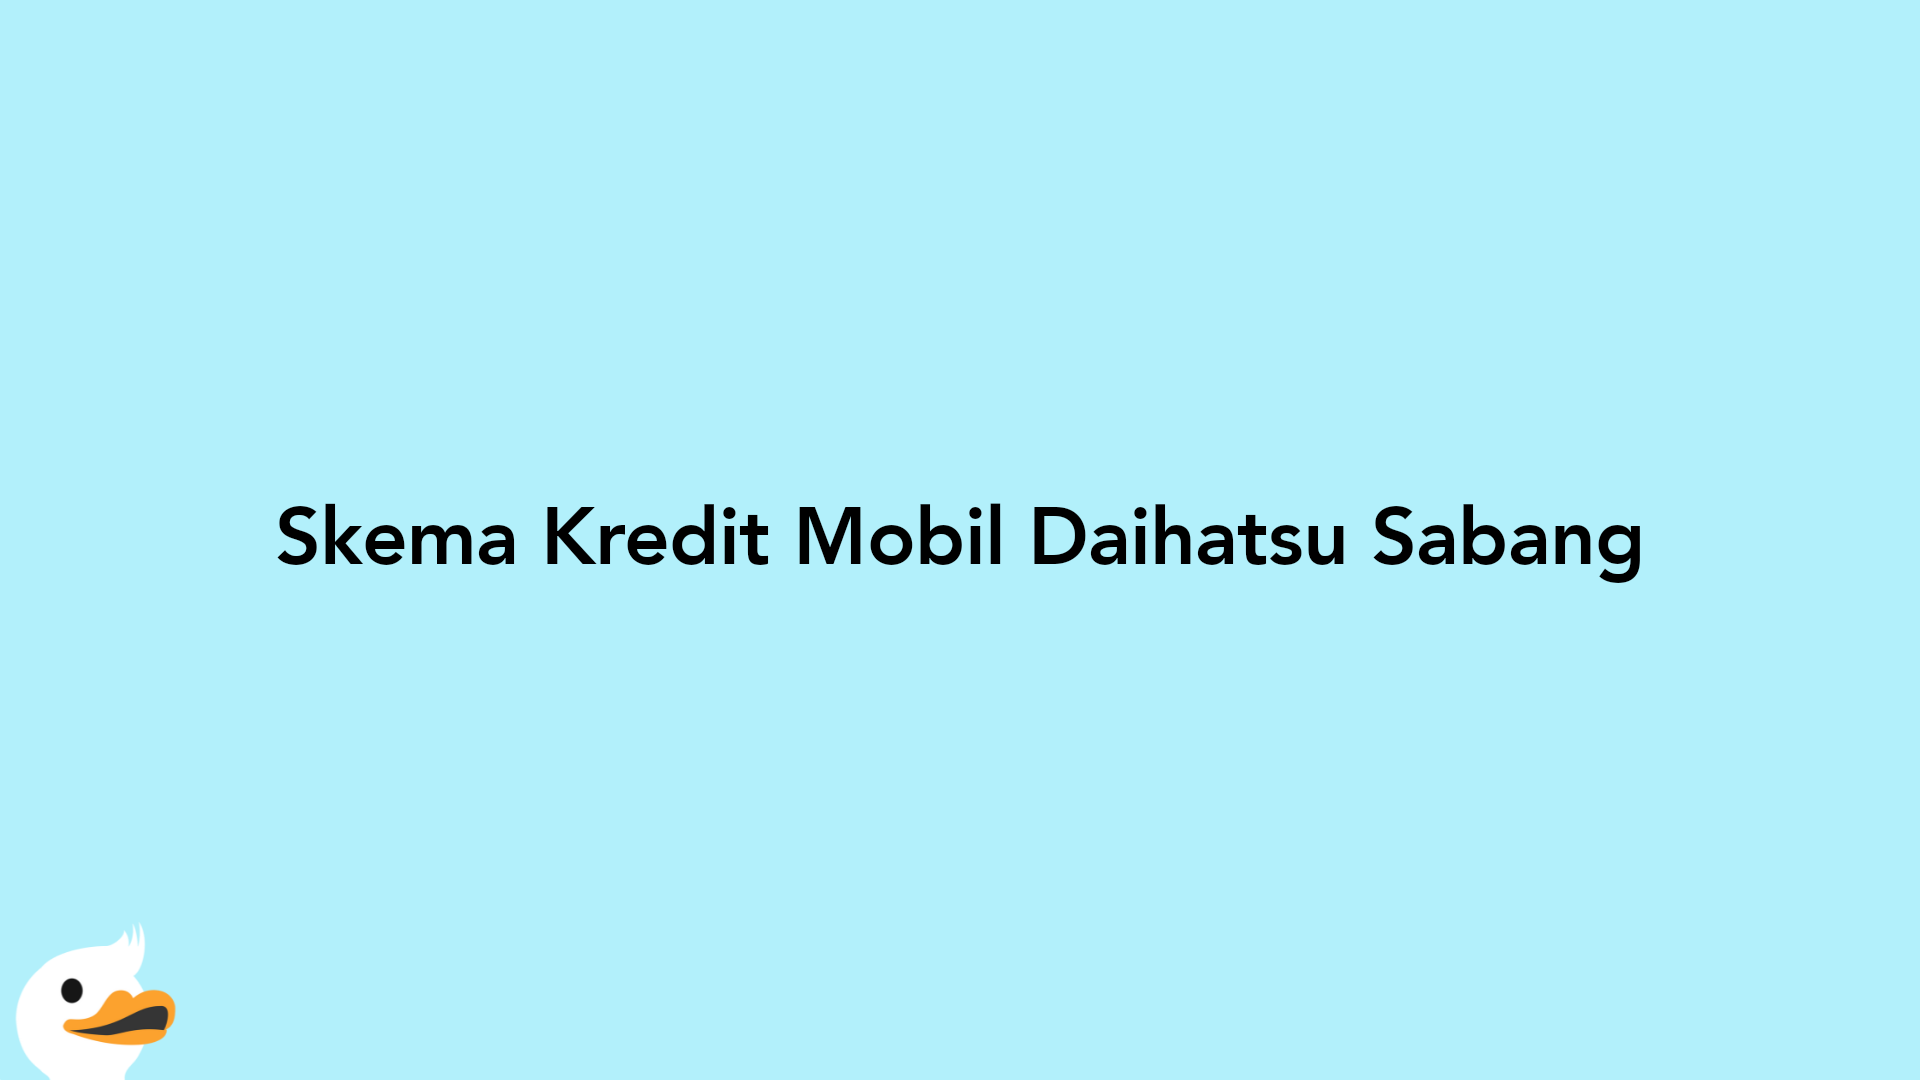 Skema Kredit Mobil Daihatsu Sabang